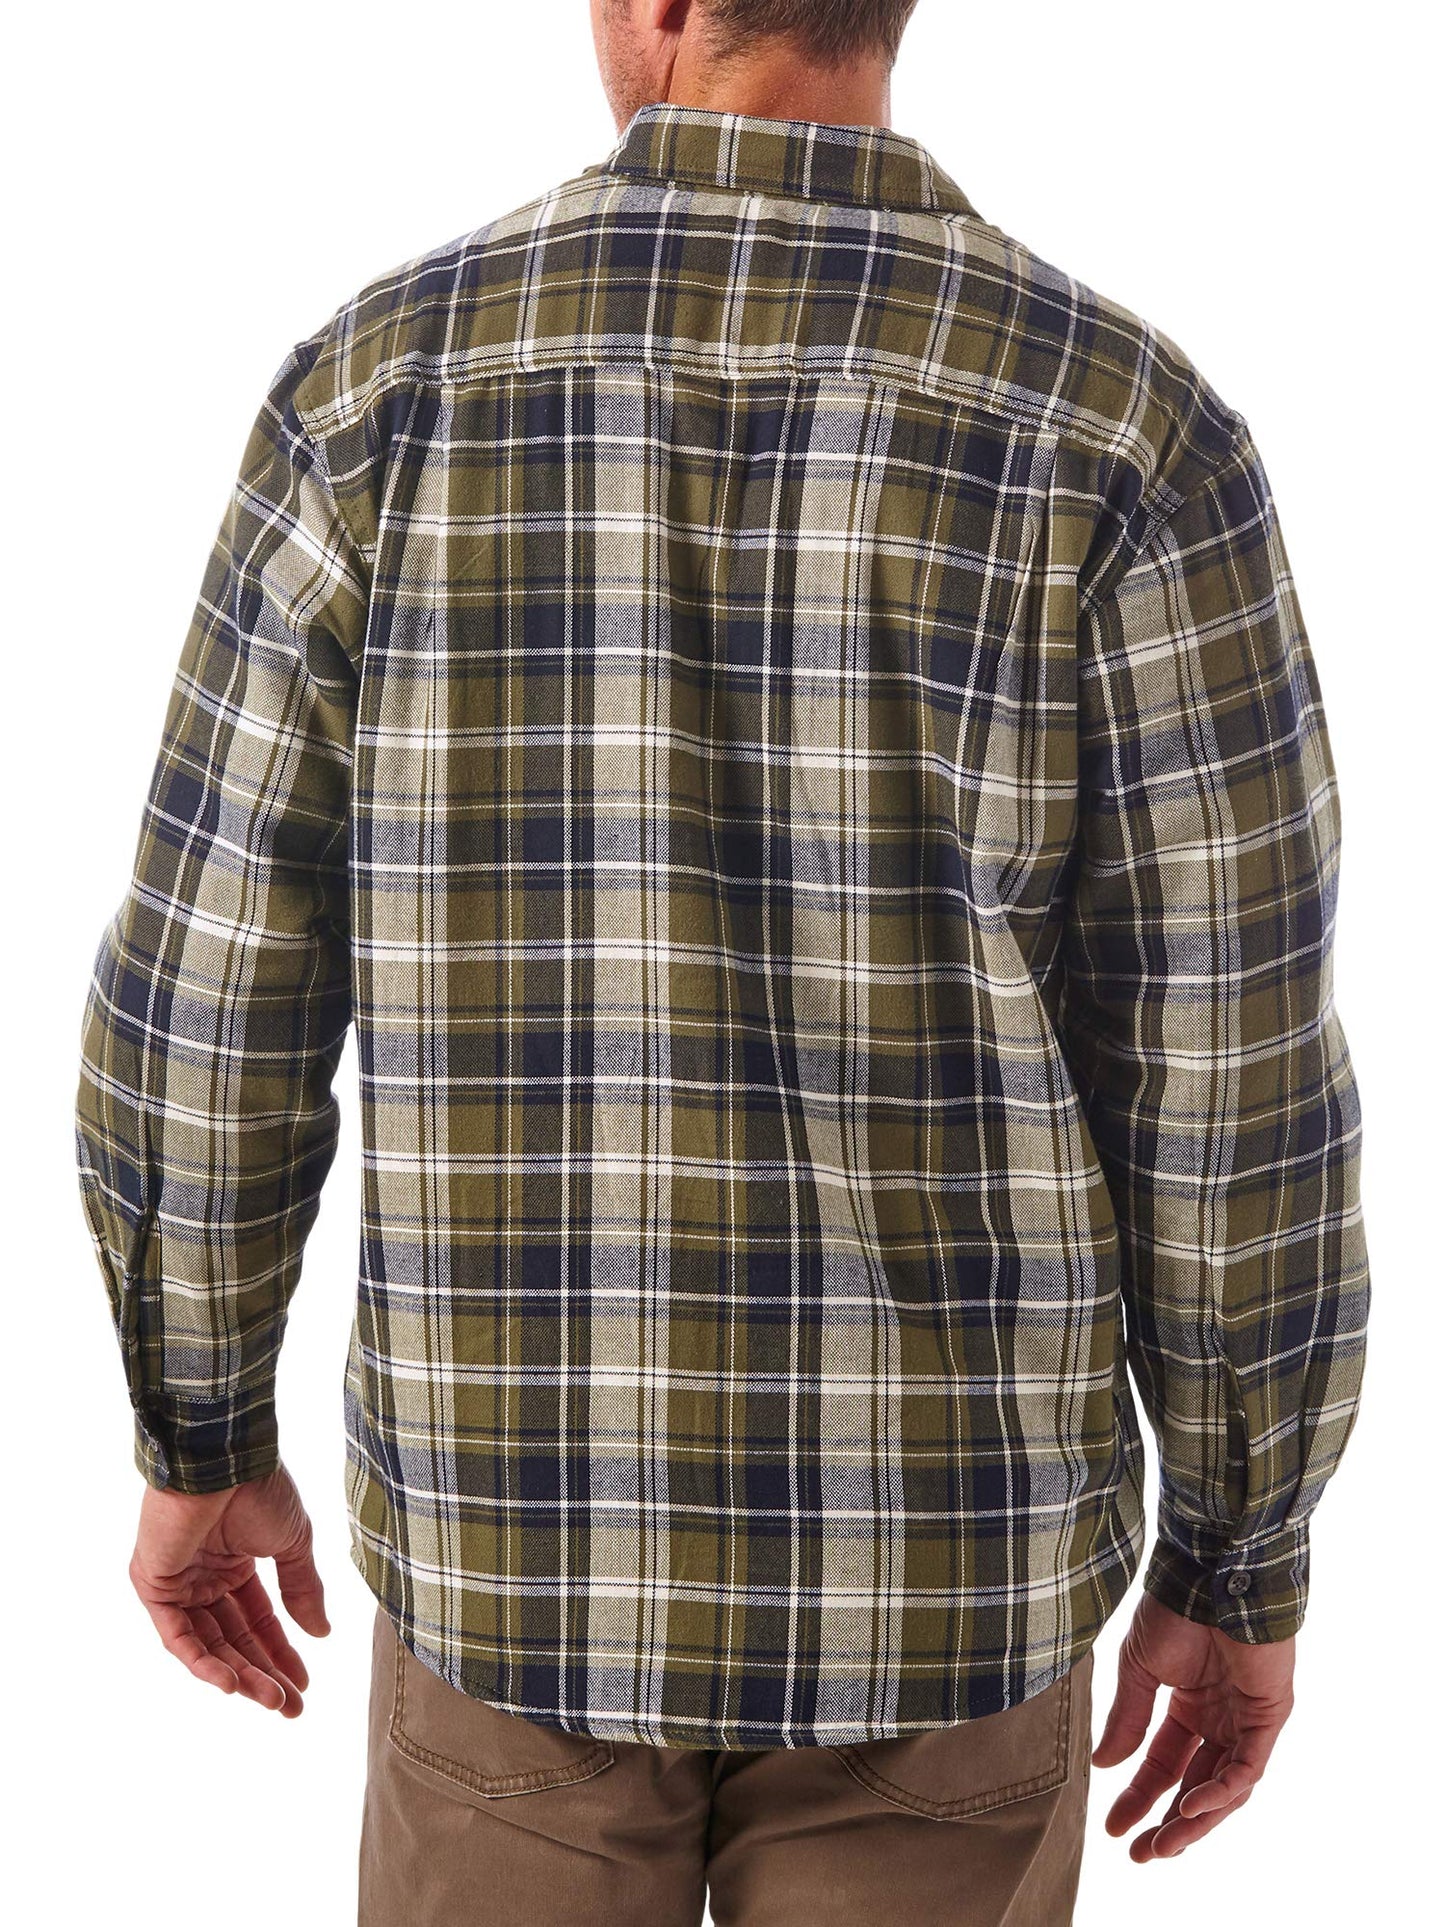 Wrangler Authentics Men's Long Sleeve Sherpa Lined Shirt Jacket, Olive Sky, Small